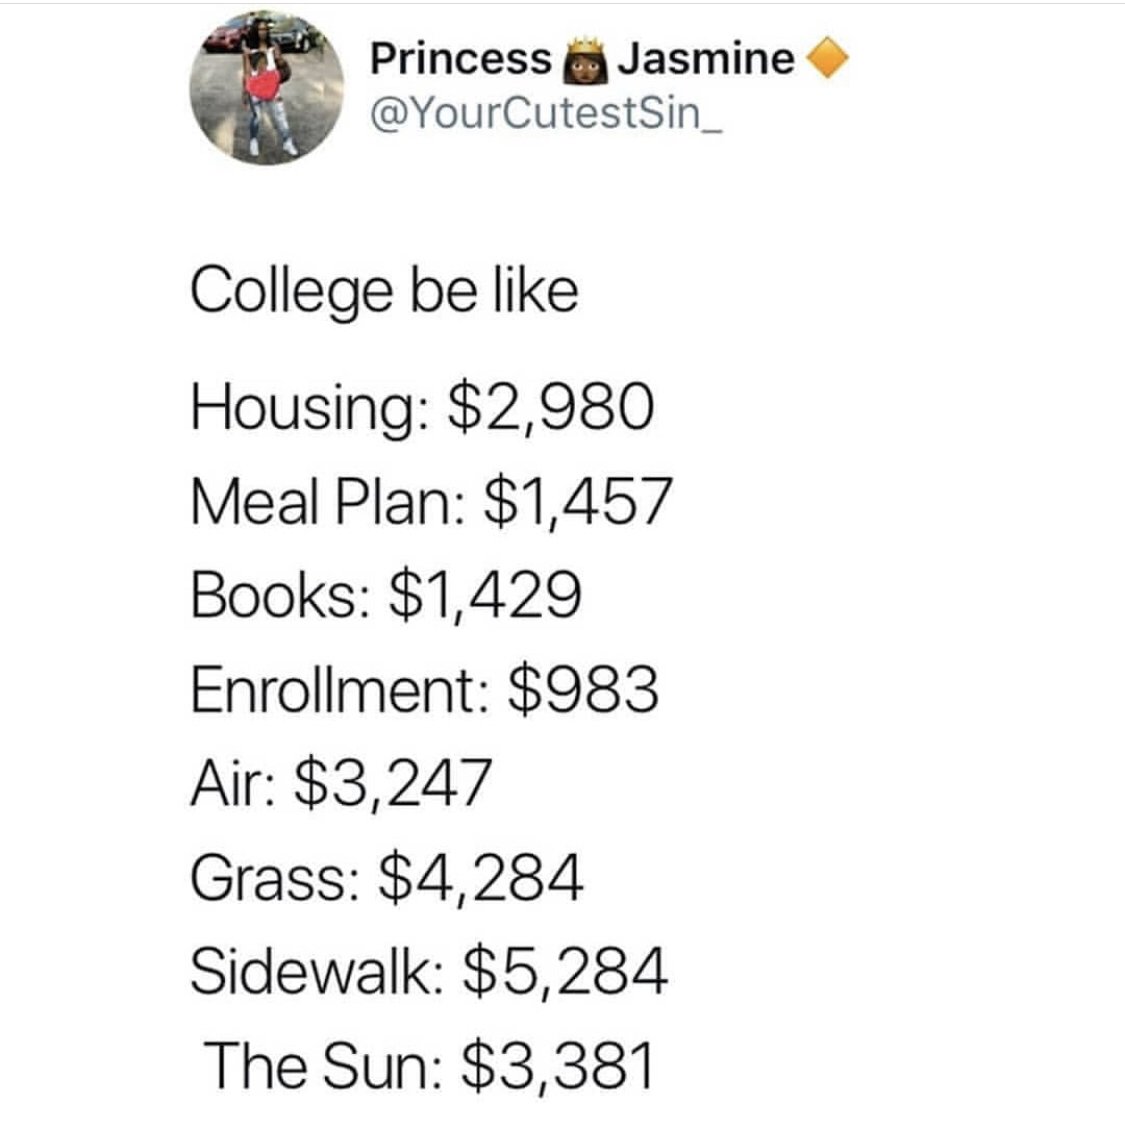 animal - Princess Jasmine College be Housing $2,980 Meal Plan $1,457 Books $1,429 Enrollment $983 Air $3,247 Grass $4,284 Sidewalk $5,284 The Sun $3,381